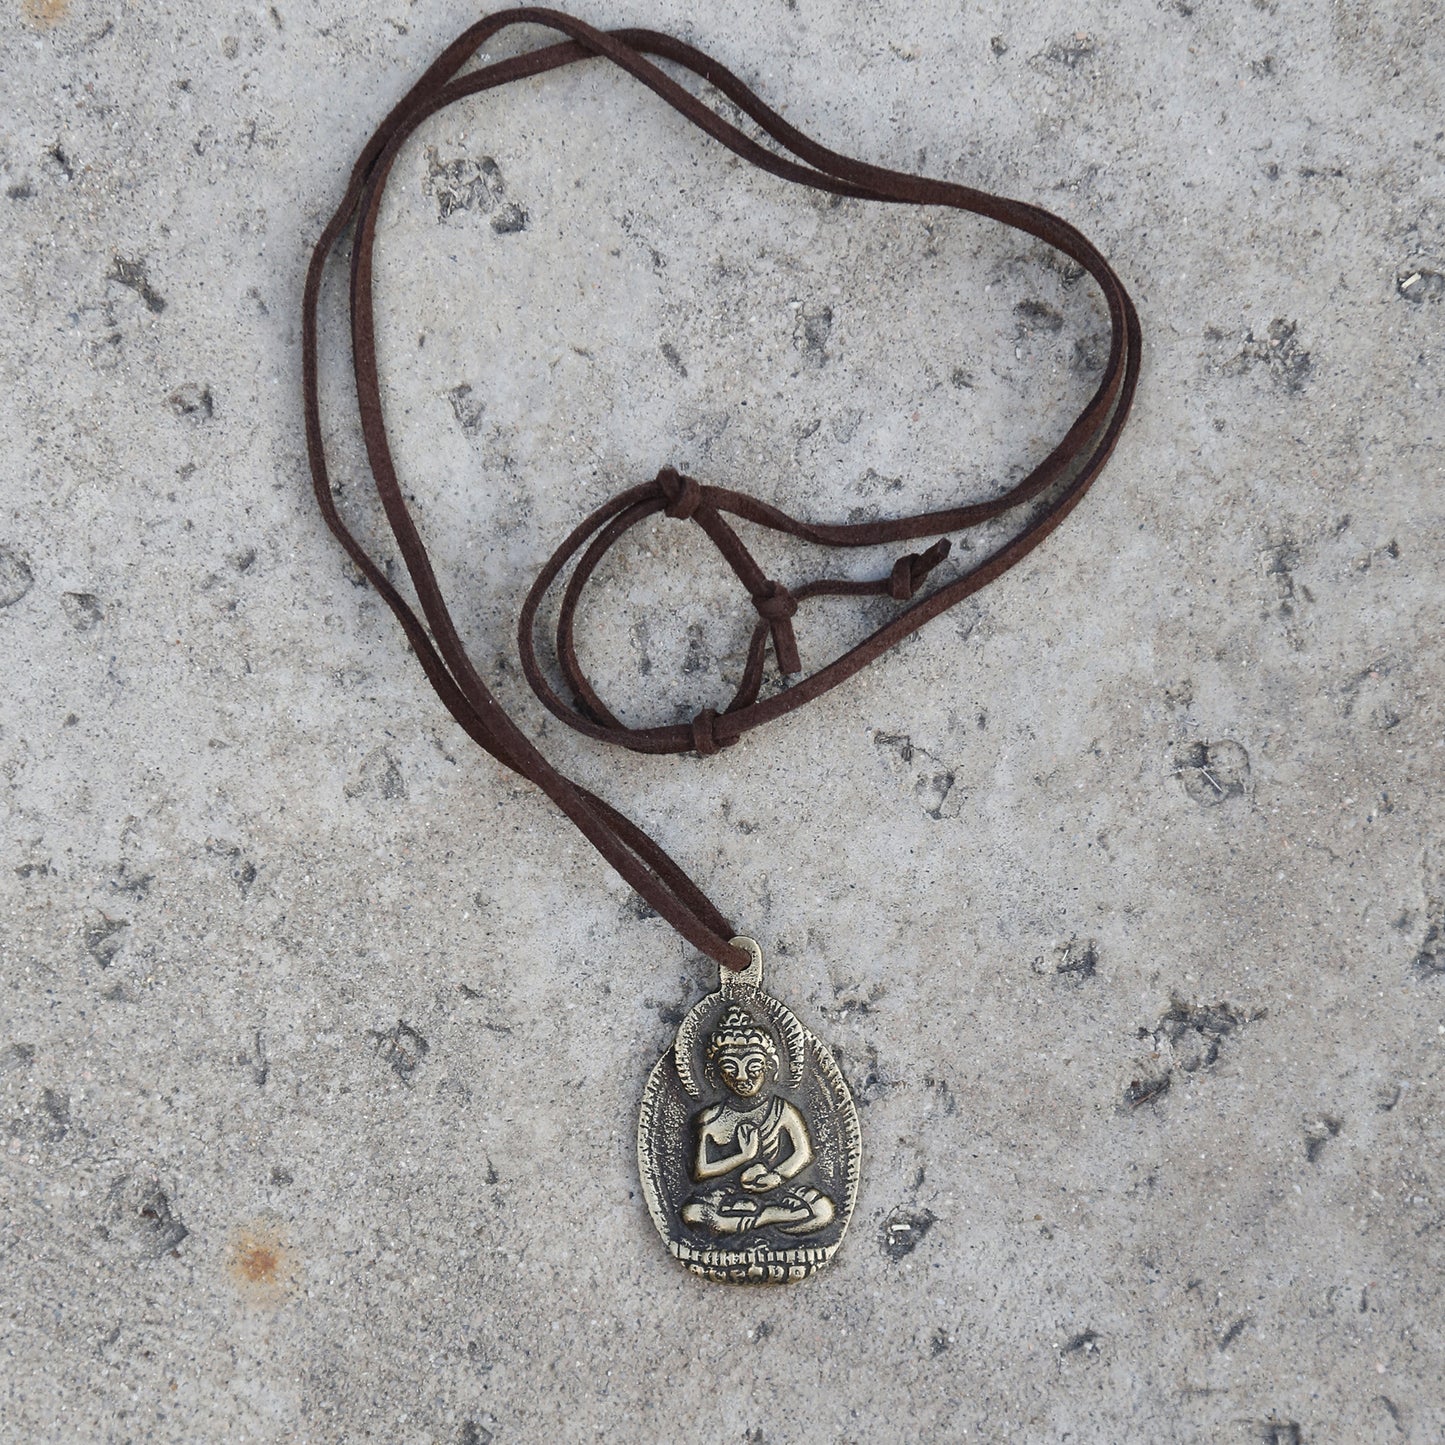 Tibetan Buddha Symbol Adjustable Necklace, Rear View Mirror Charm #9.